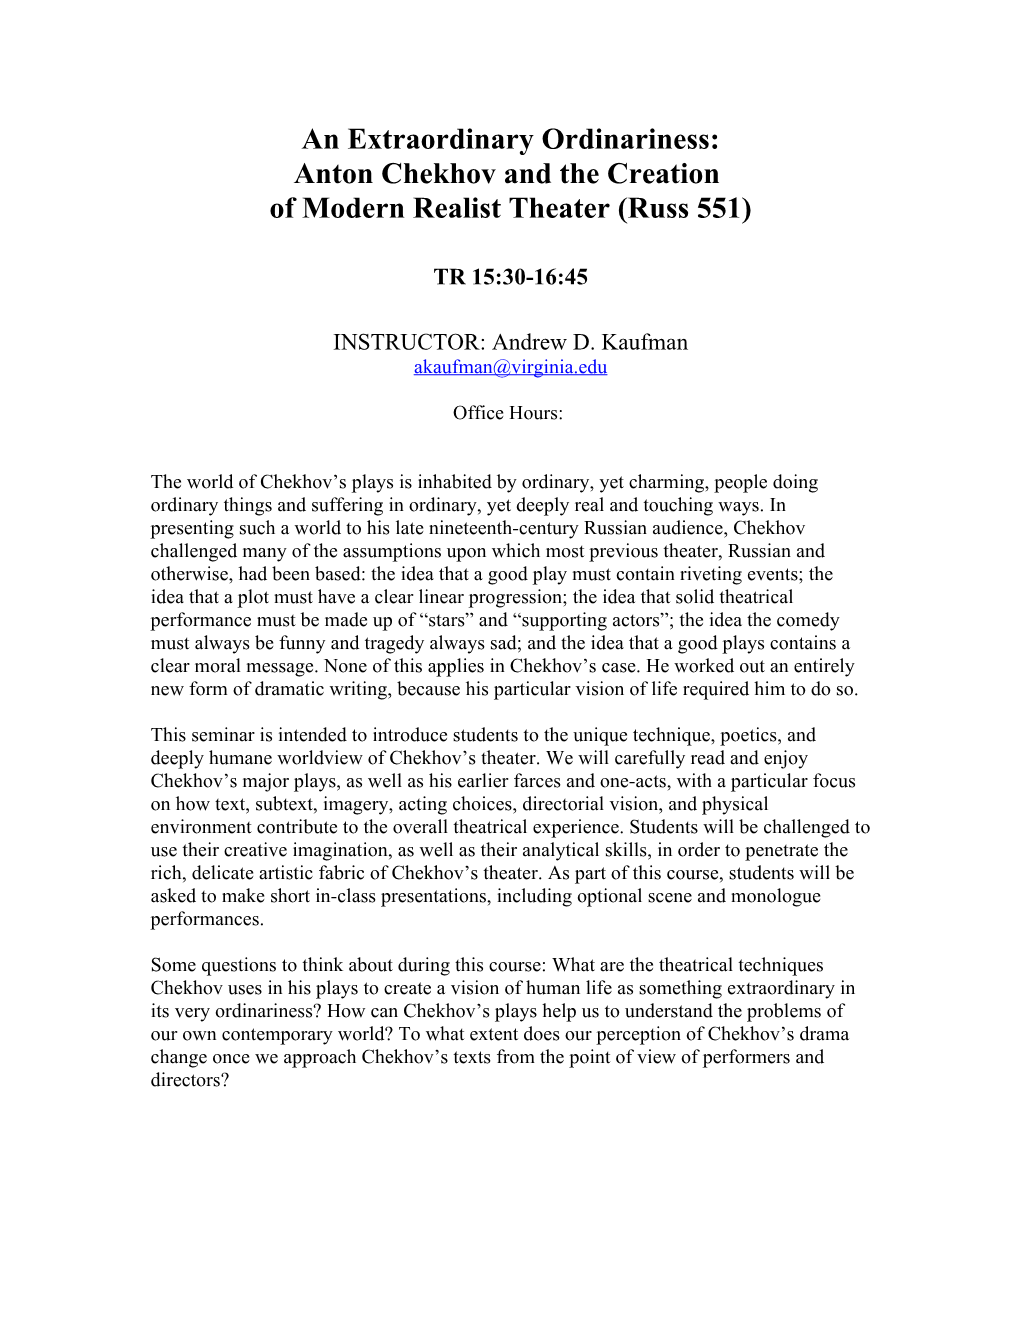 An Extraordinary Ordinariness: Anton Chekhov and the Creation of Modern Realist Theater (Russ 551)